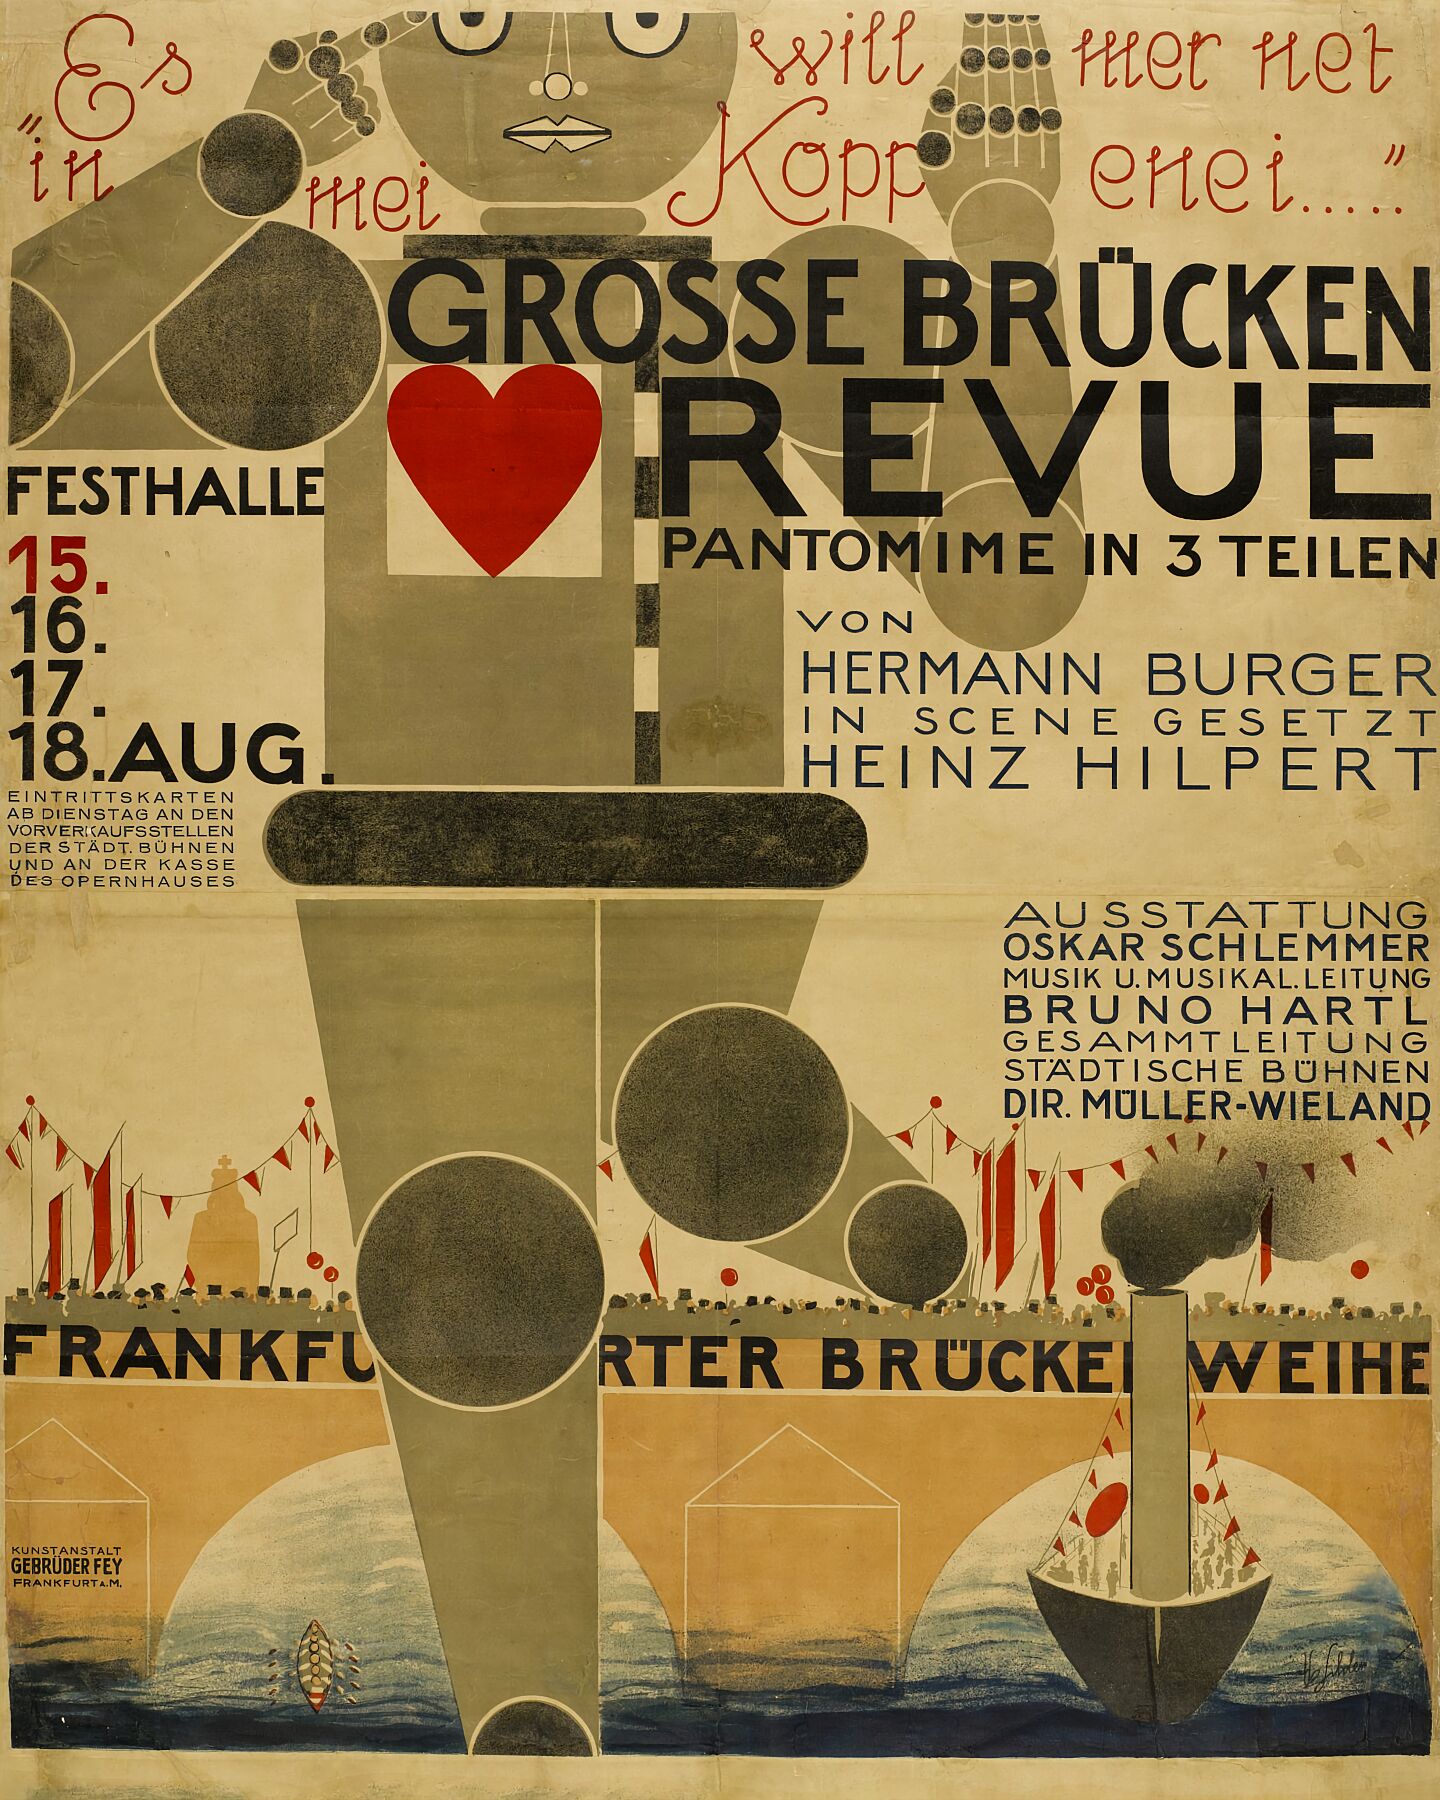 Poster for the Great Bridge Revue (Große Brücken Revue) by Oskar Schlemmer - 1926